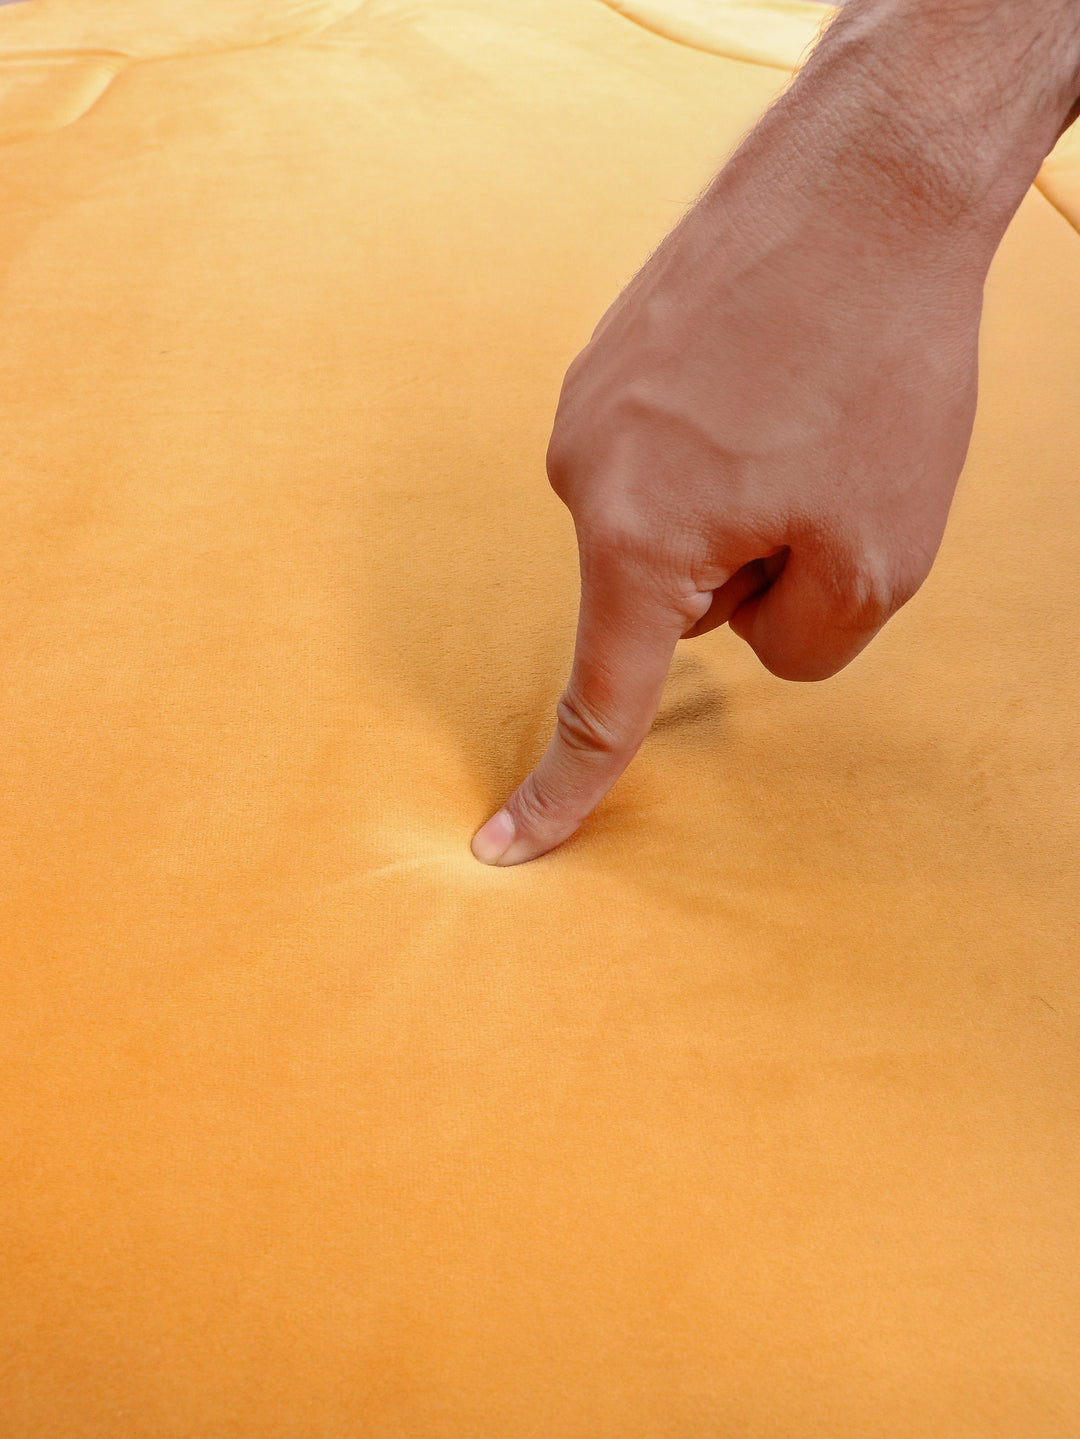 Orange Arch Cut Prayer Mat With Foam Padding